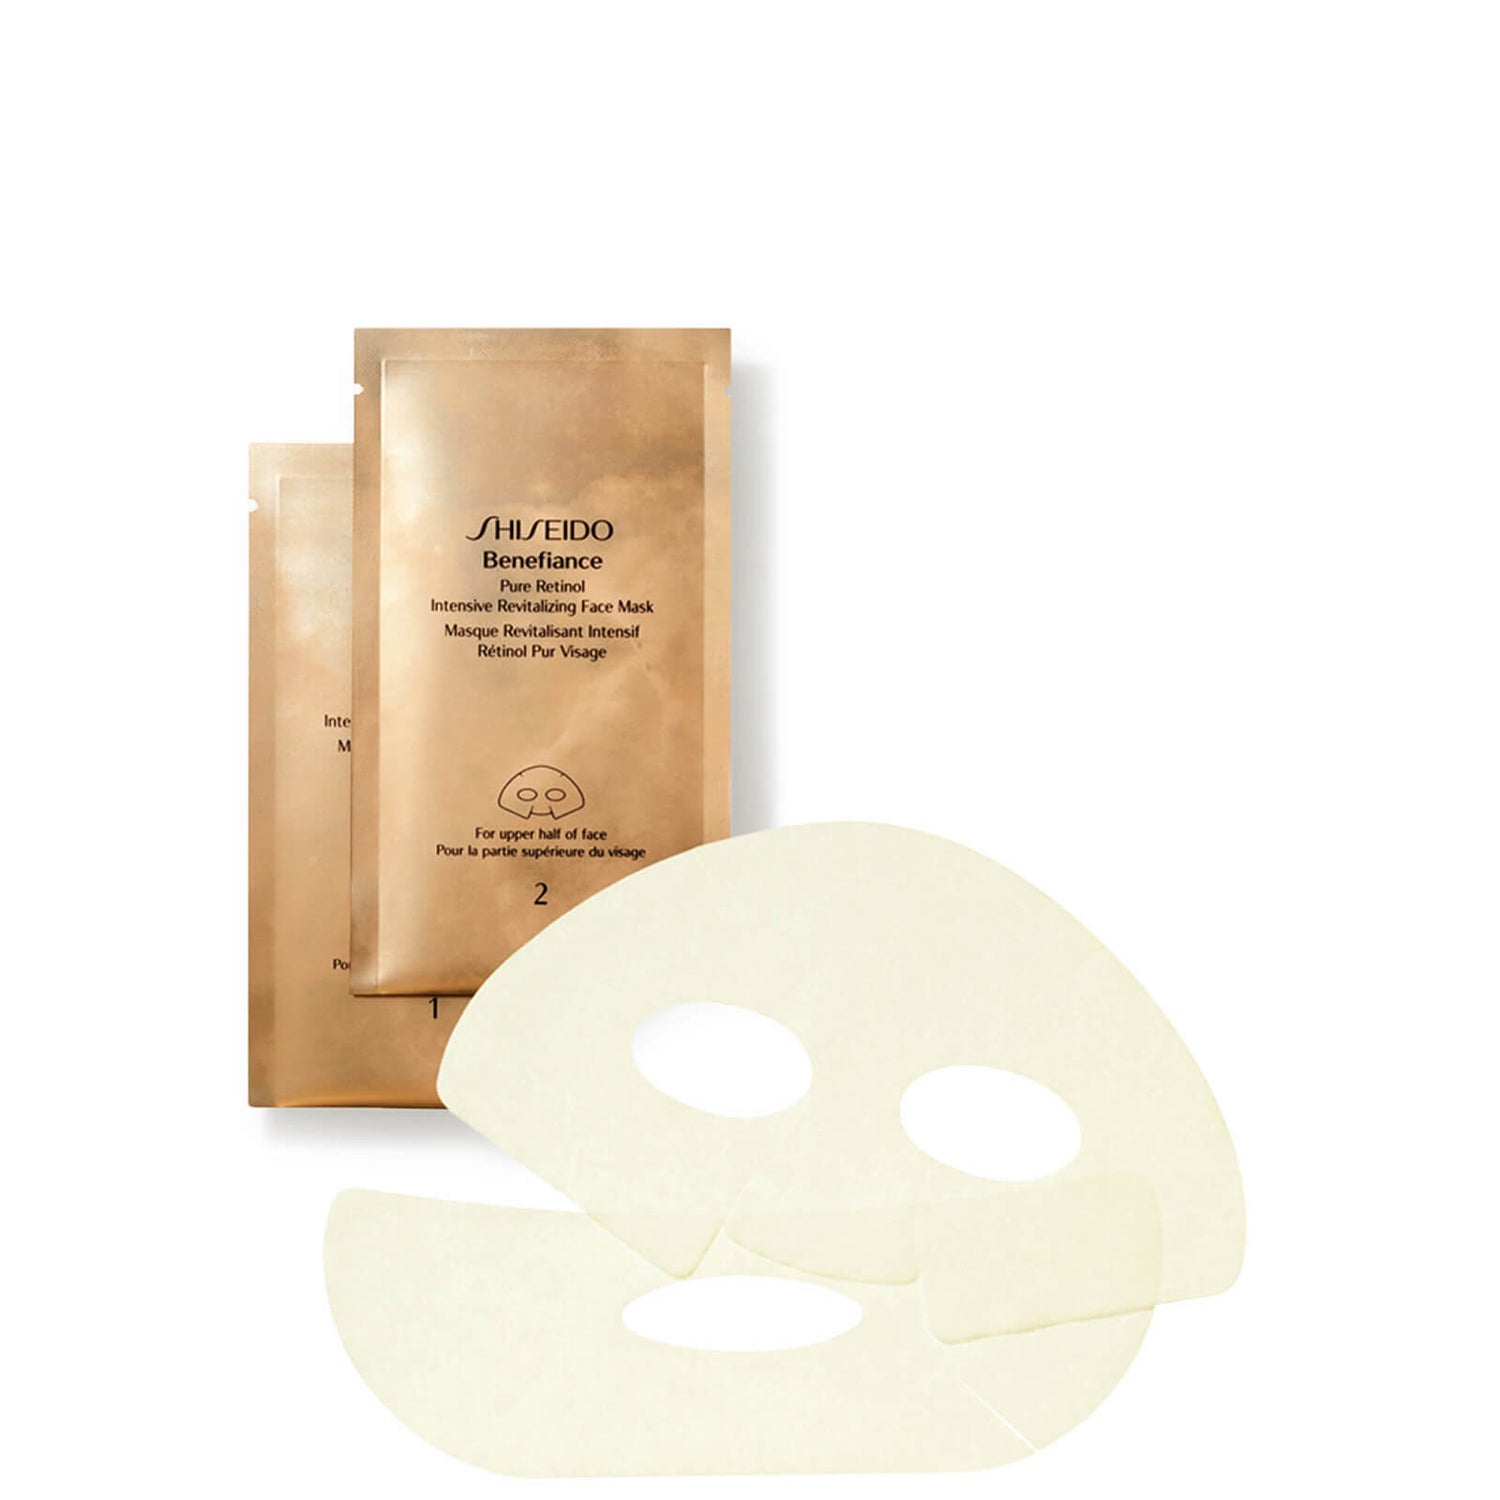 Shiseido Benefiance Pure Retinol Intensive Revitalizing Face Mask (4 count)